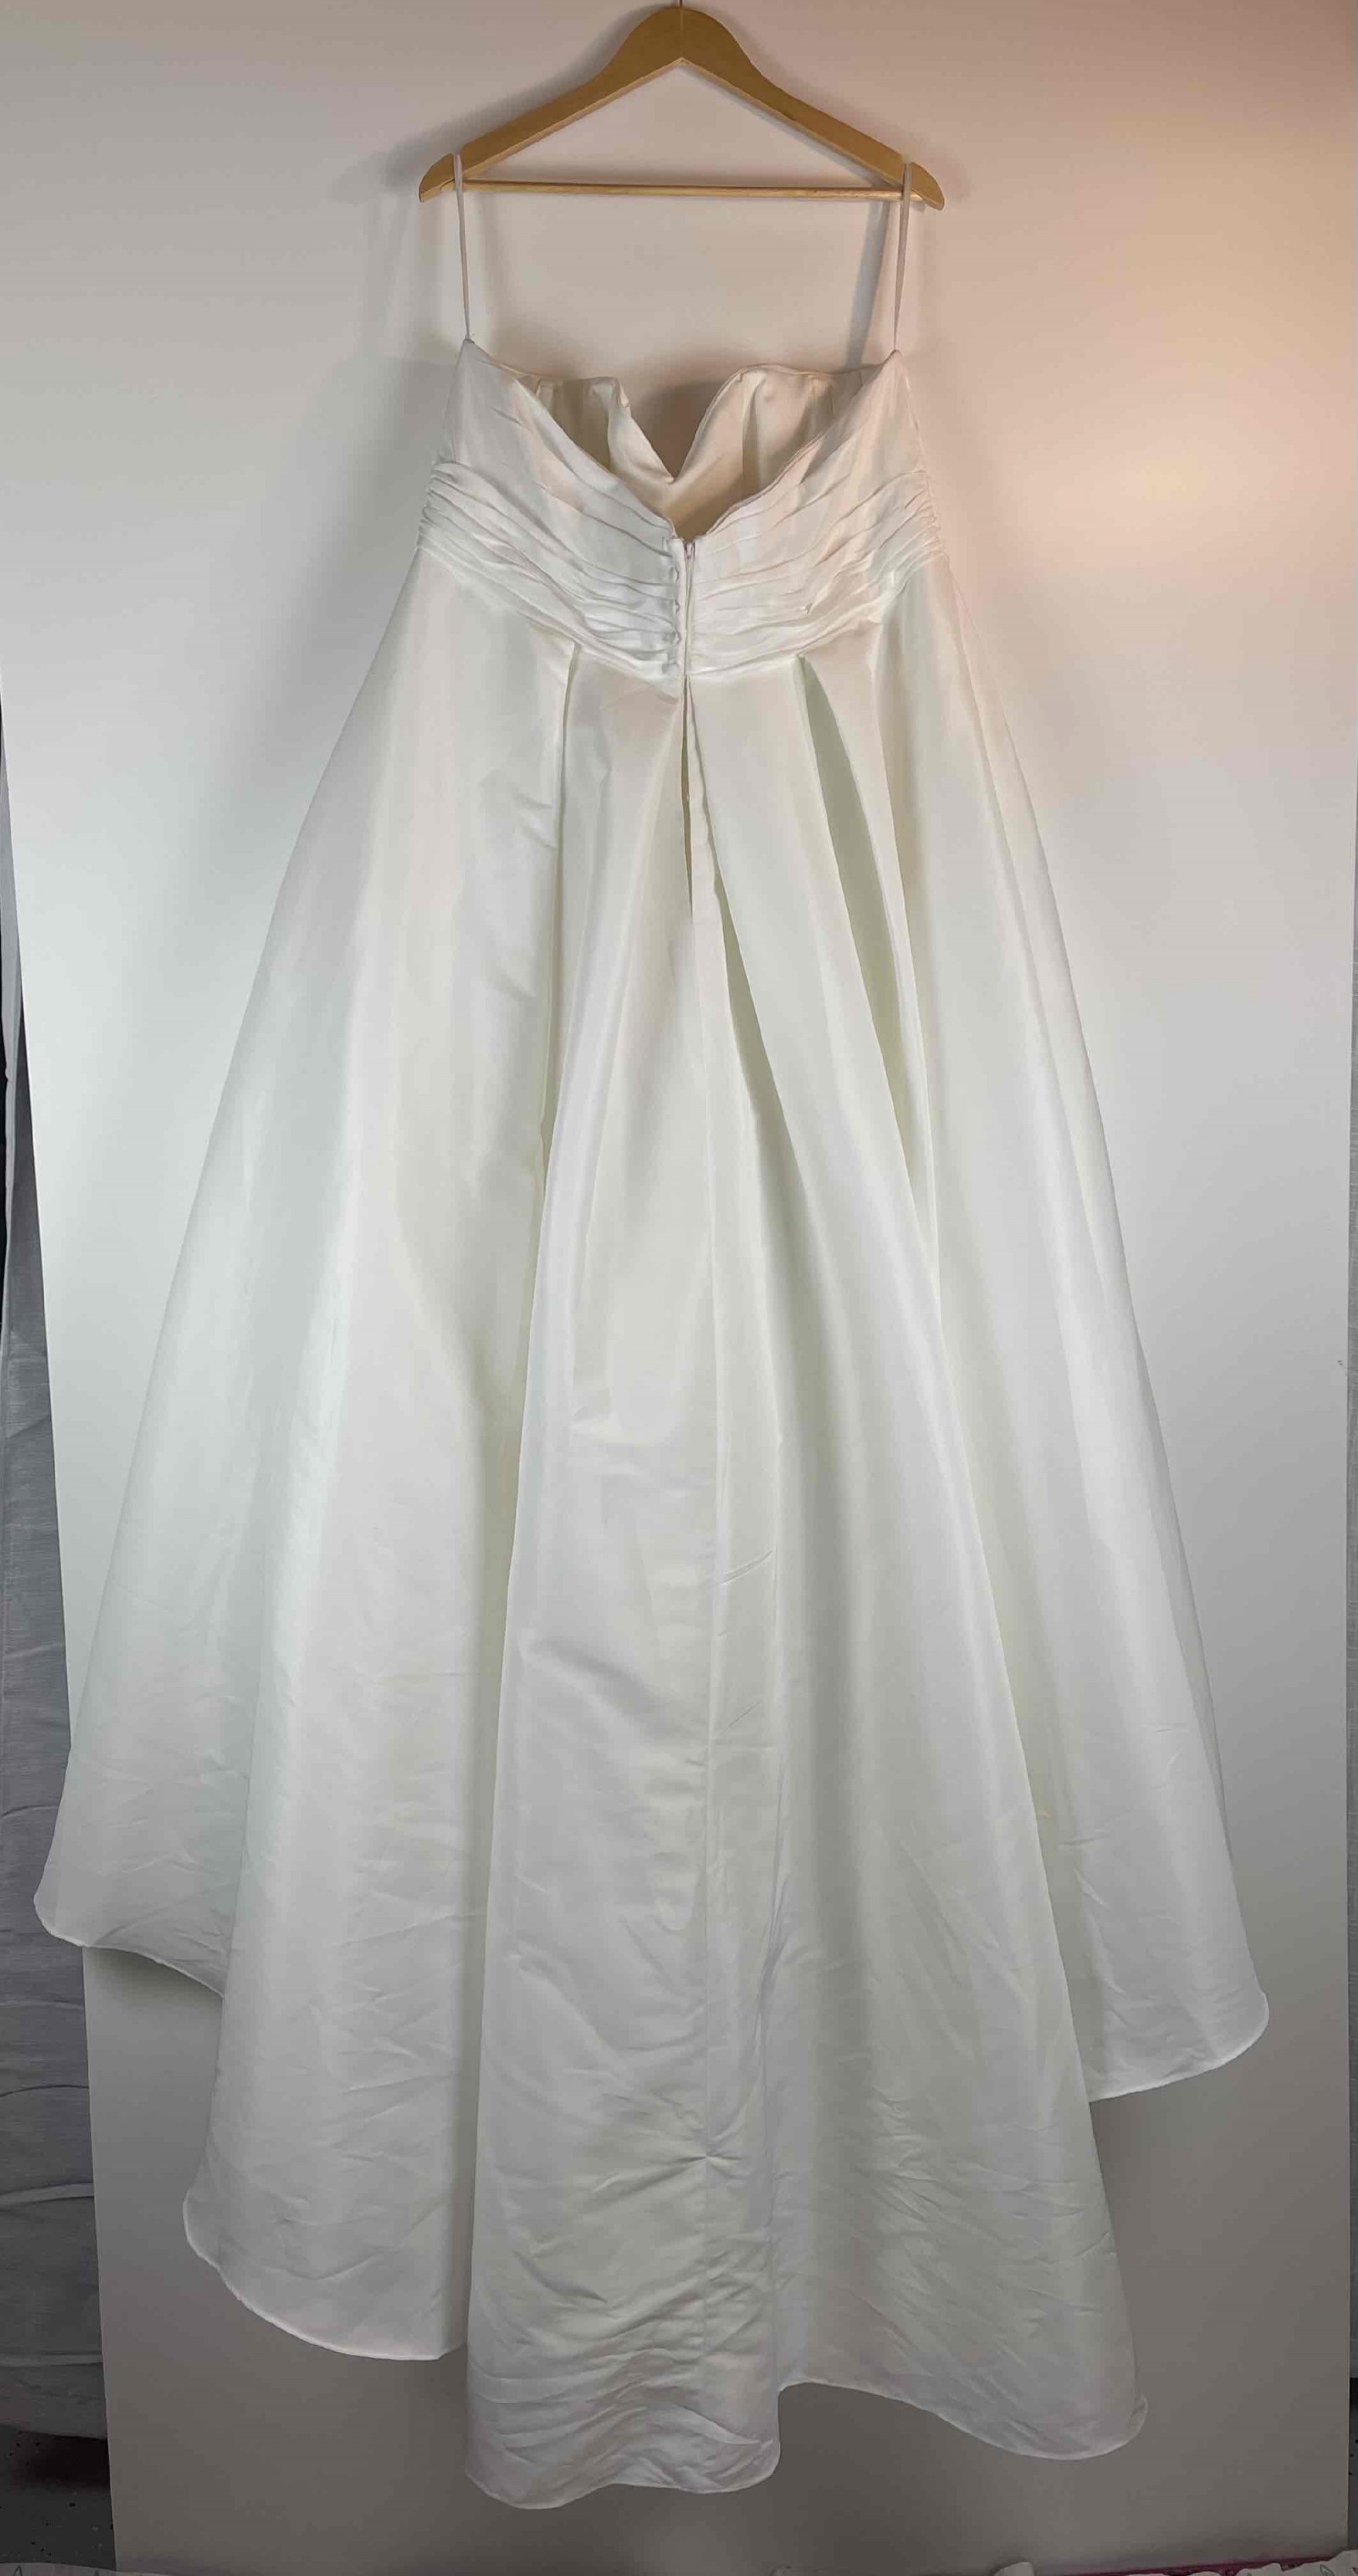 Davids Bridal Collection Wg3707 New Wedding Dress Save 55 Stillwhite 9634